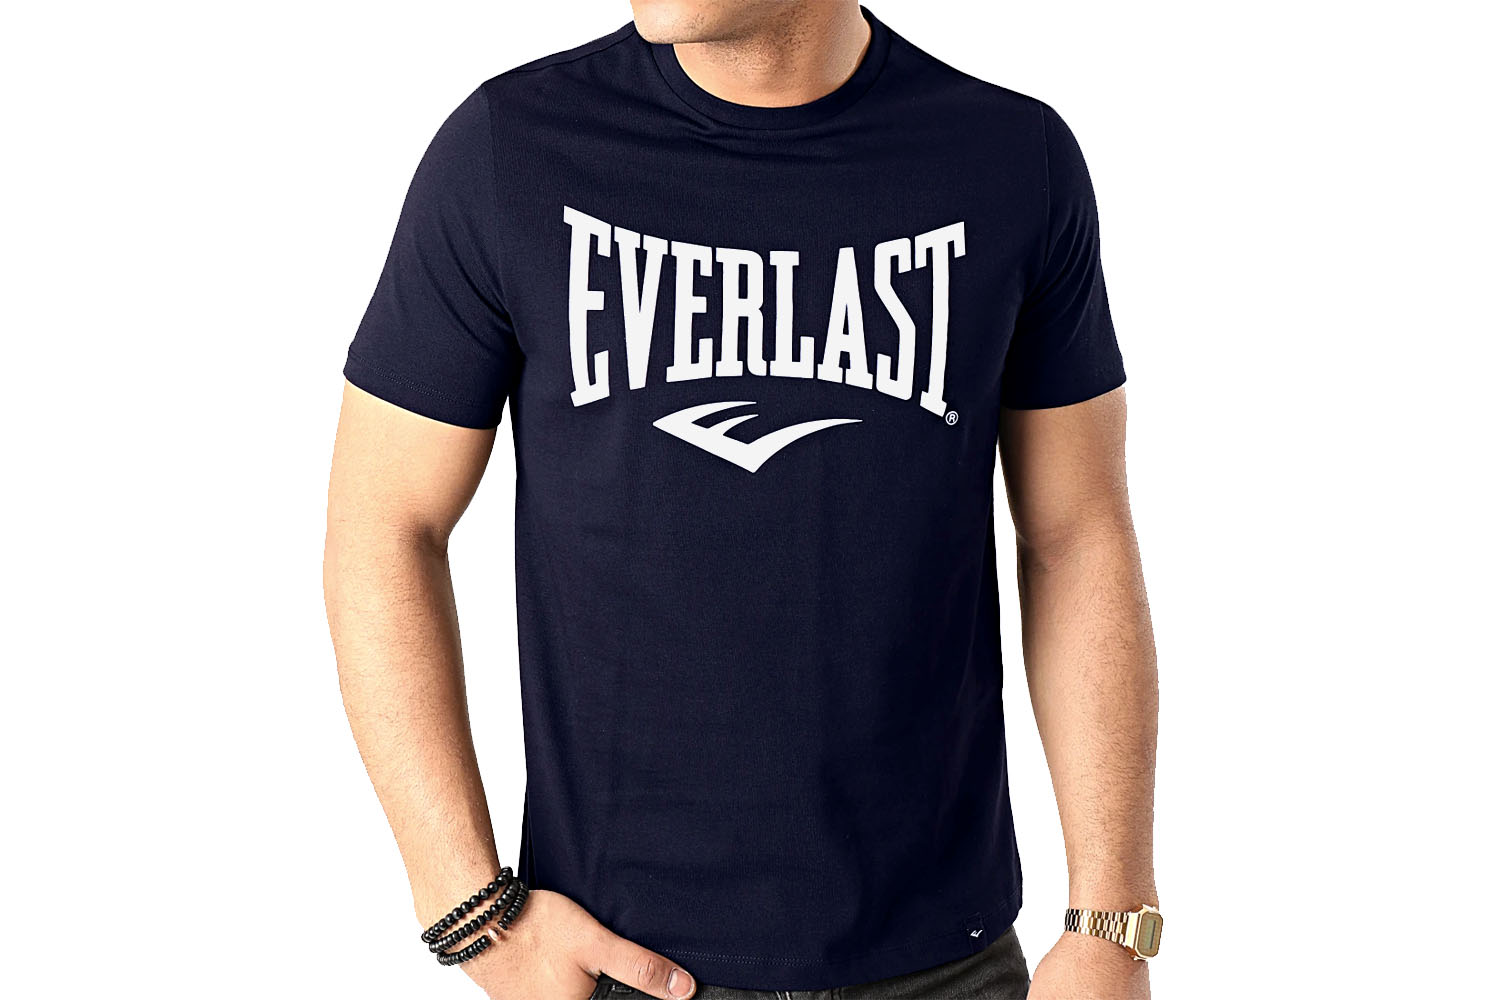 Everlast Boy's Manga Larga T-Shirt Atlético de baloncesto tamaño-L azul Nuevo con etiquetas 